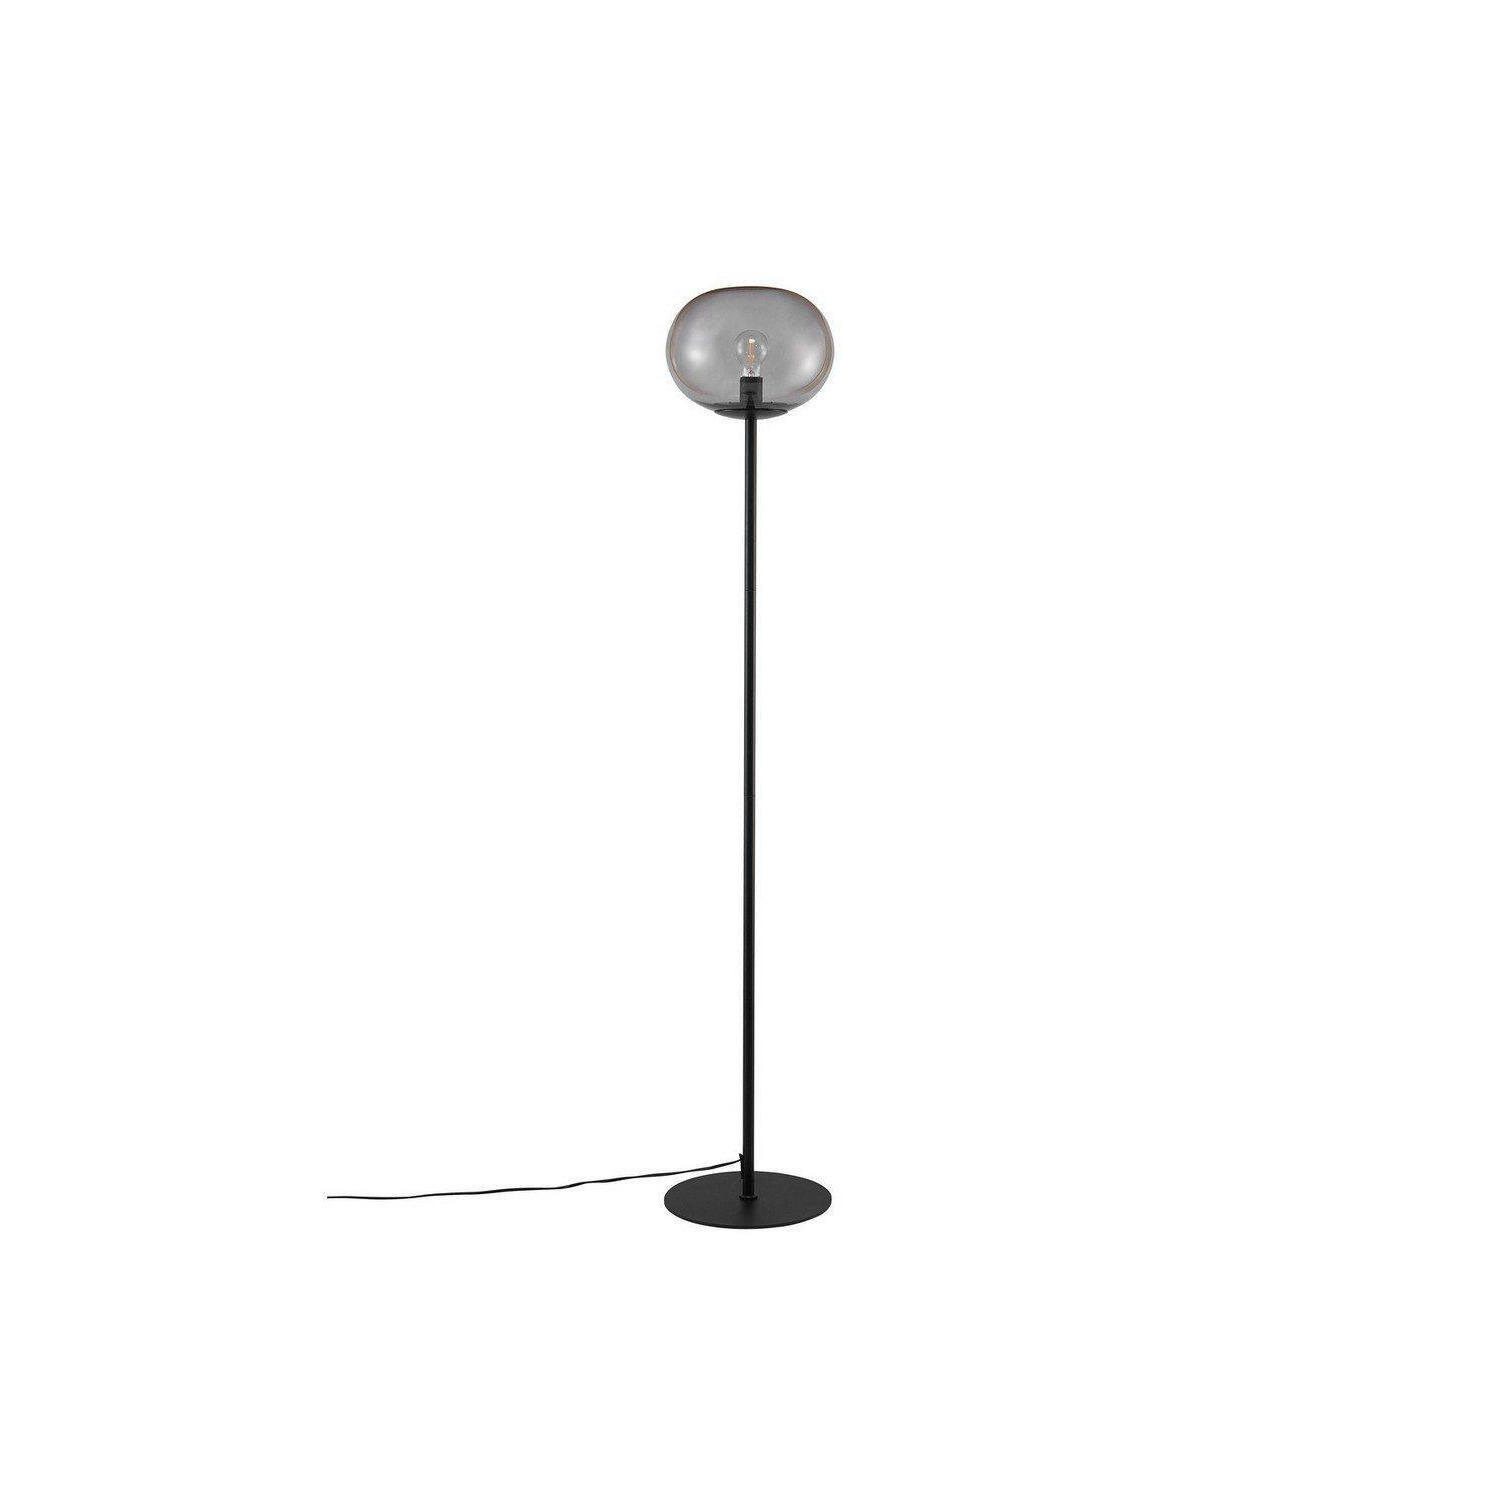 Alton Globe Floor Lamp Black E27 - image 1